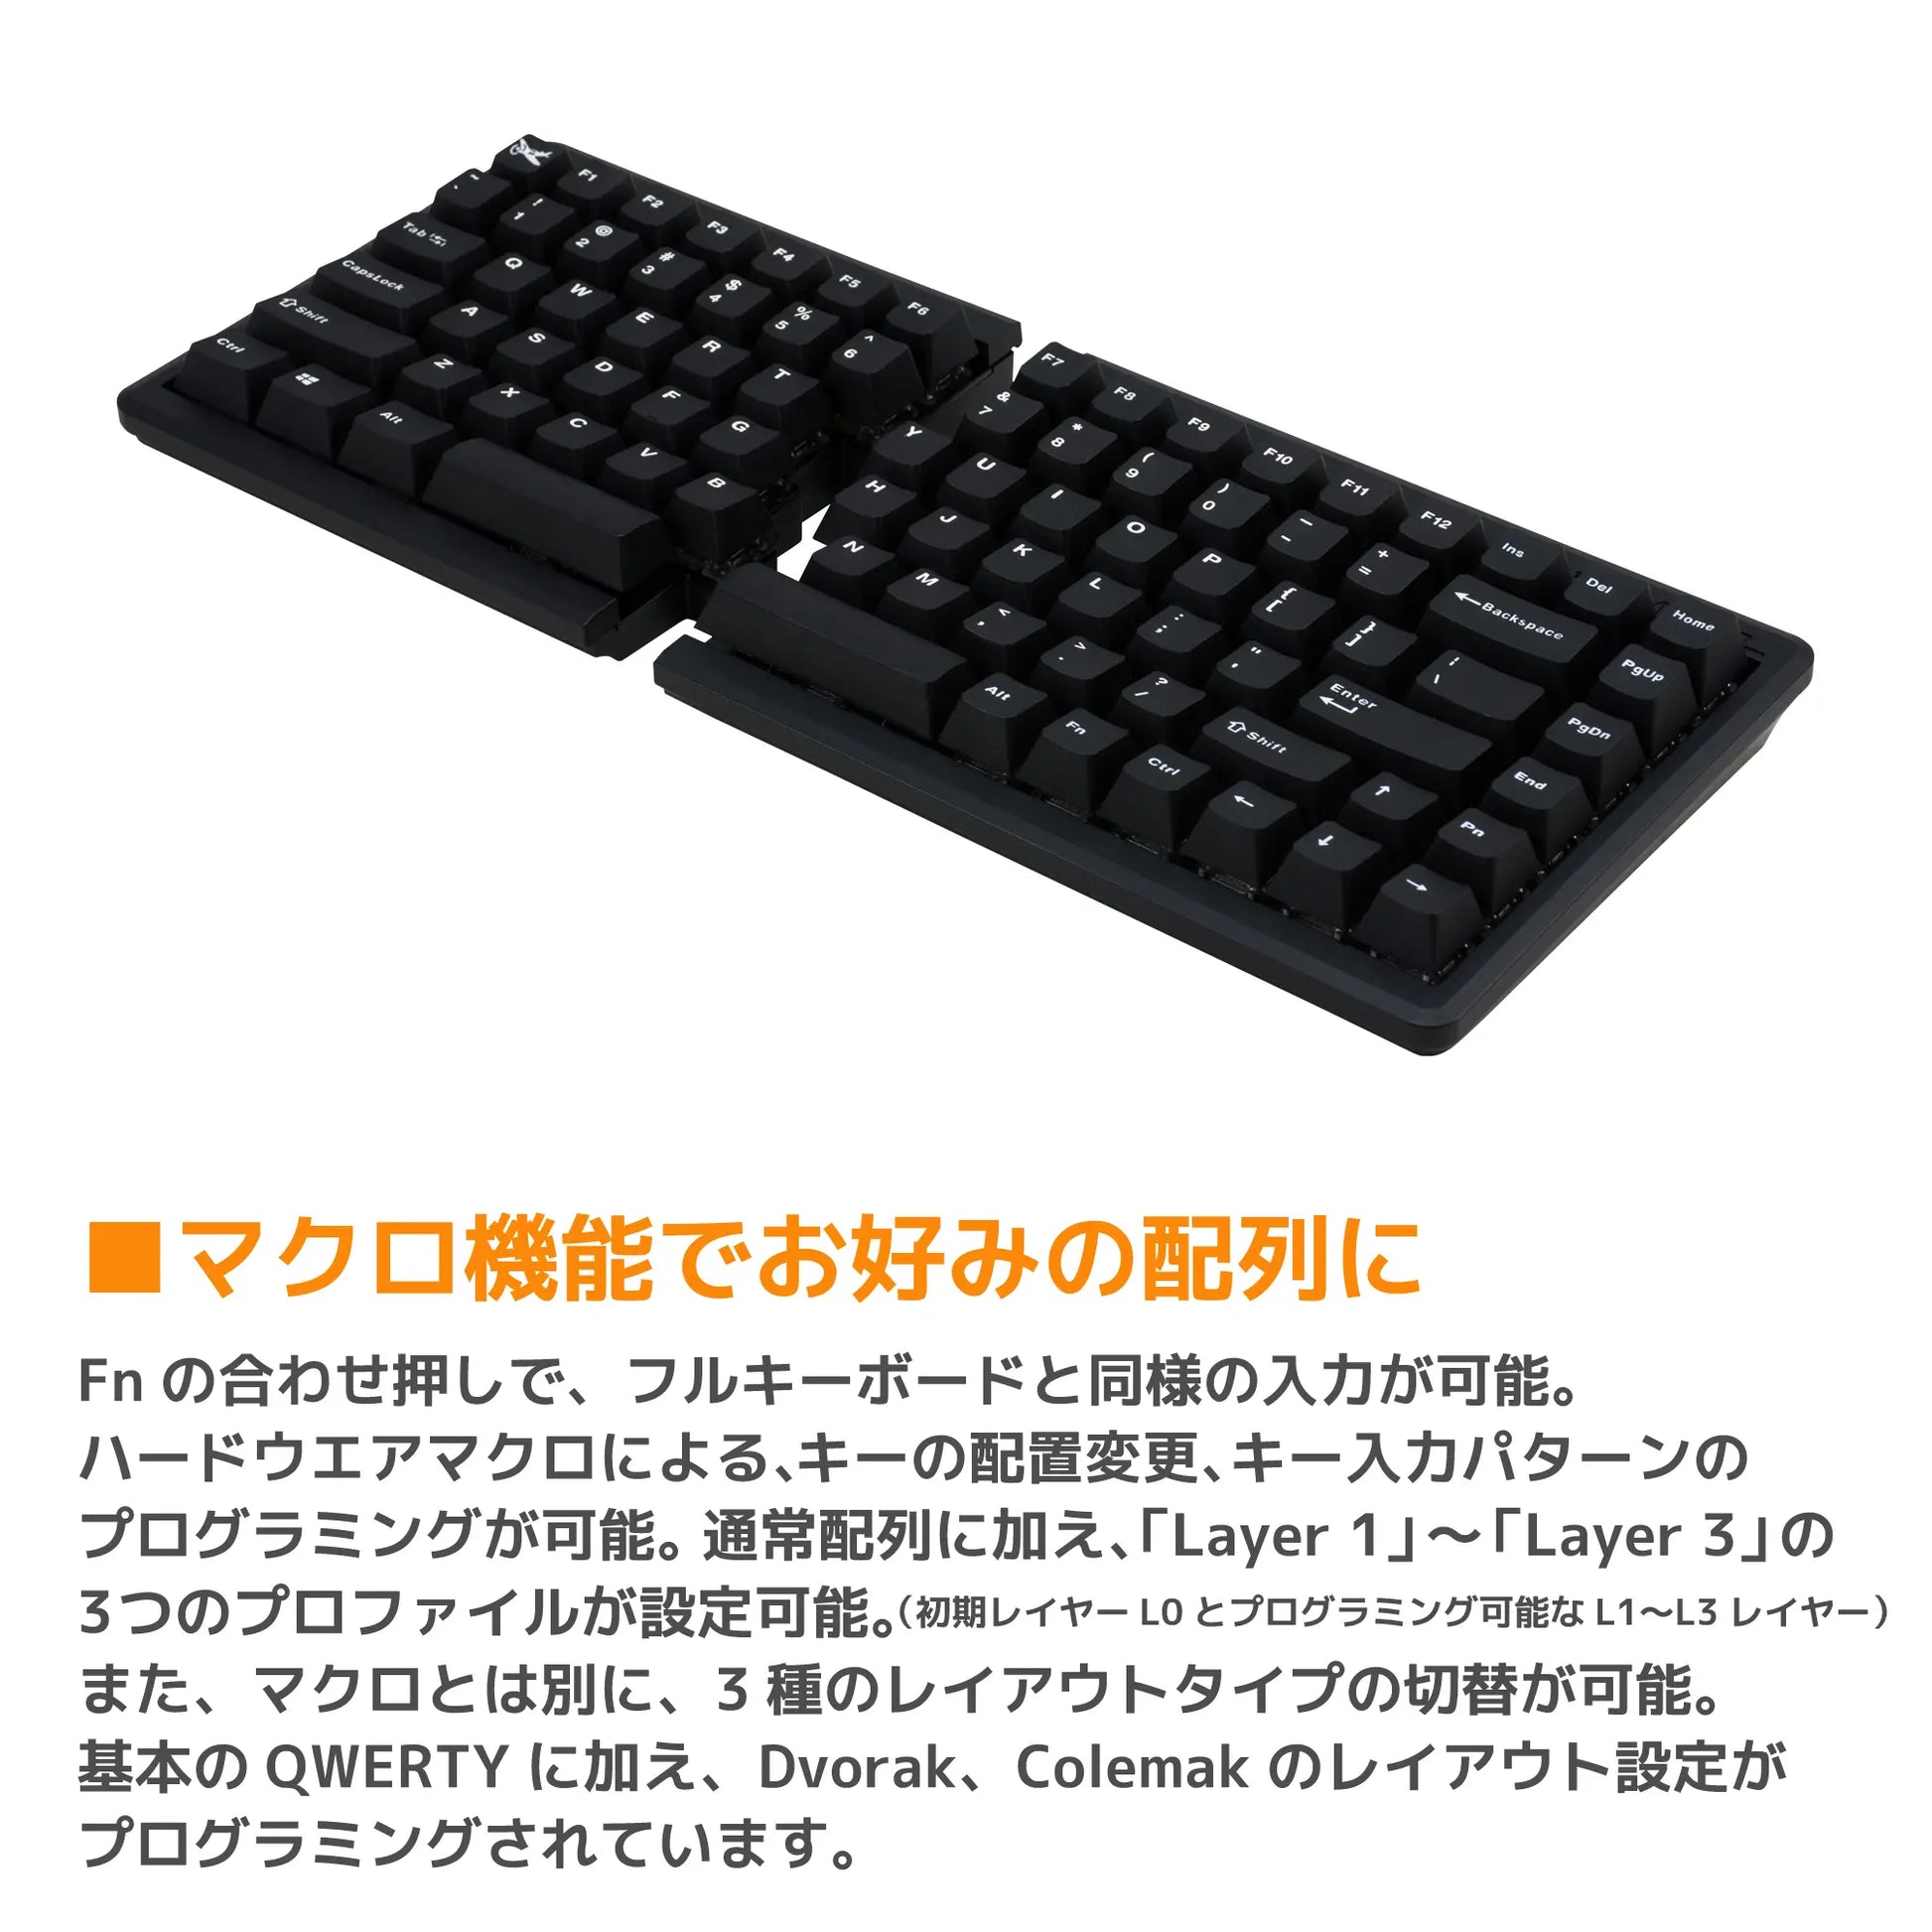 Mistel キーボード BAROCCO MD770 RGB BT - 英語配列｜キーボード専門 